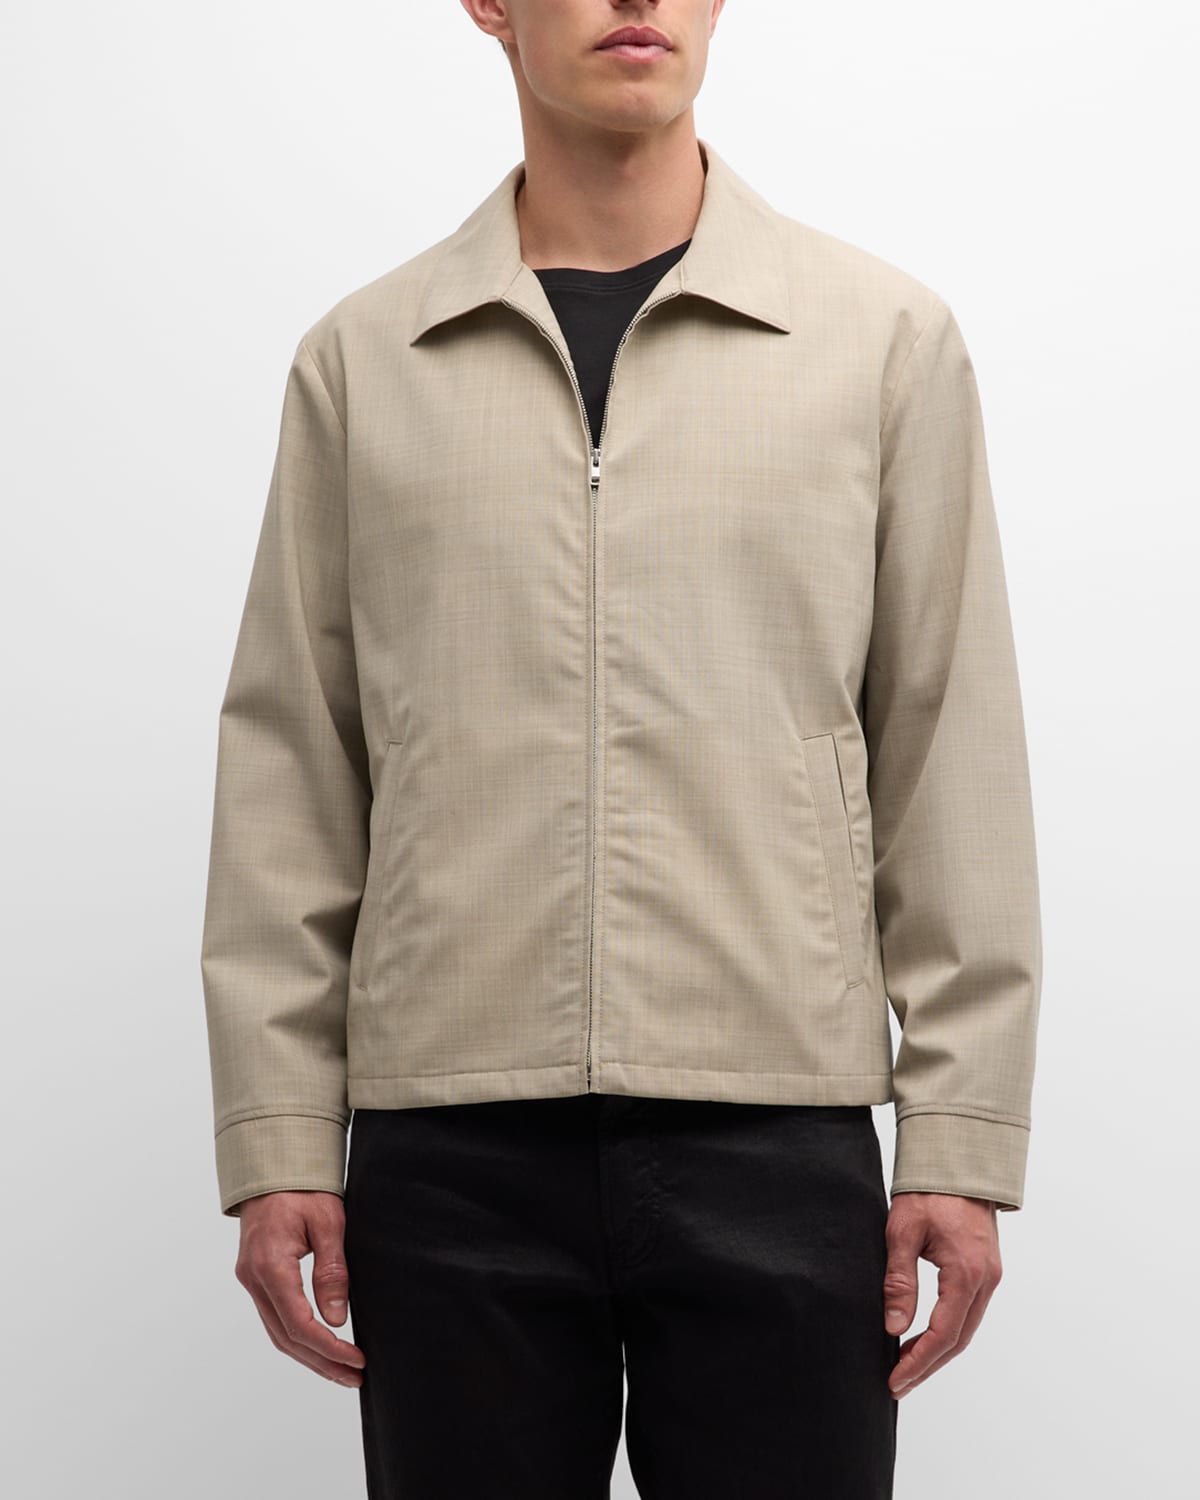 Men's Hazleton Jacket in New Tailor